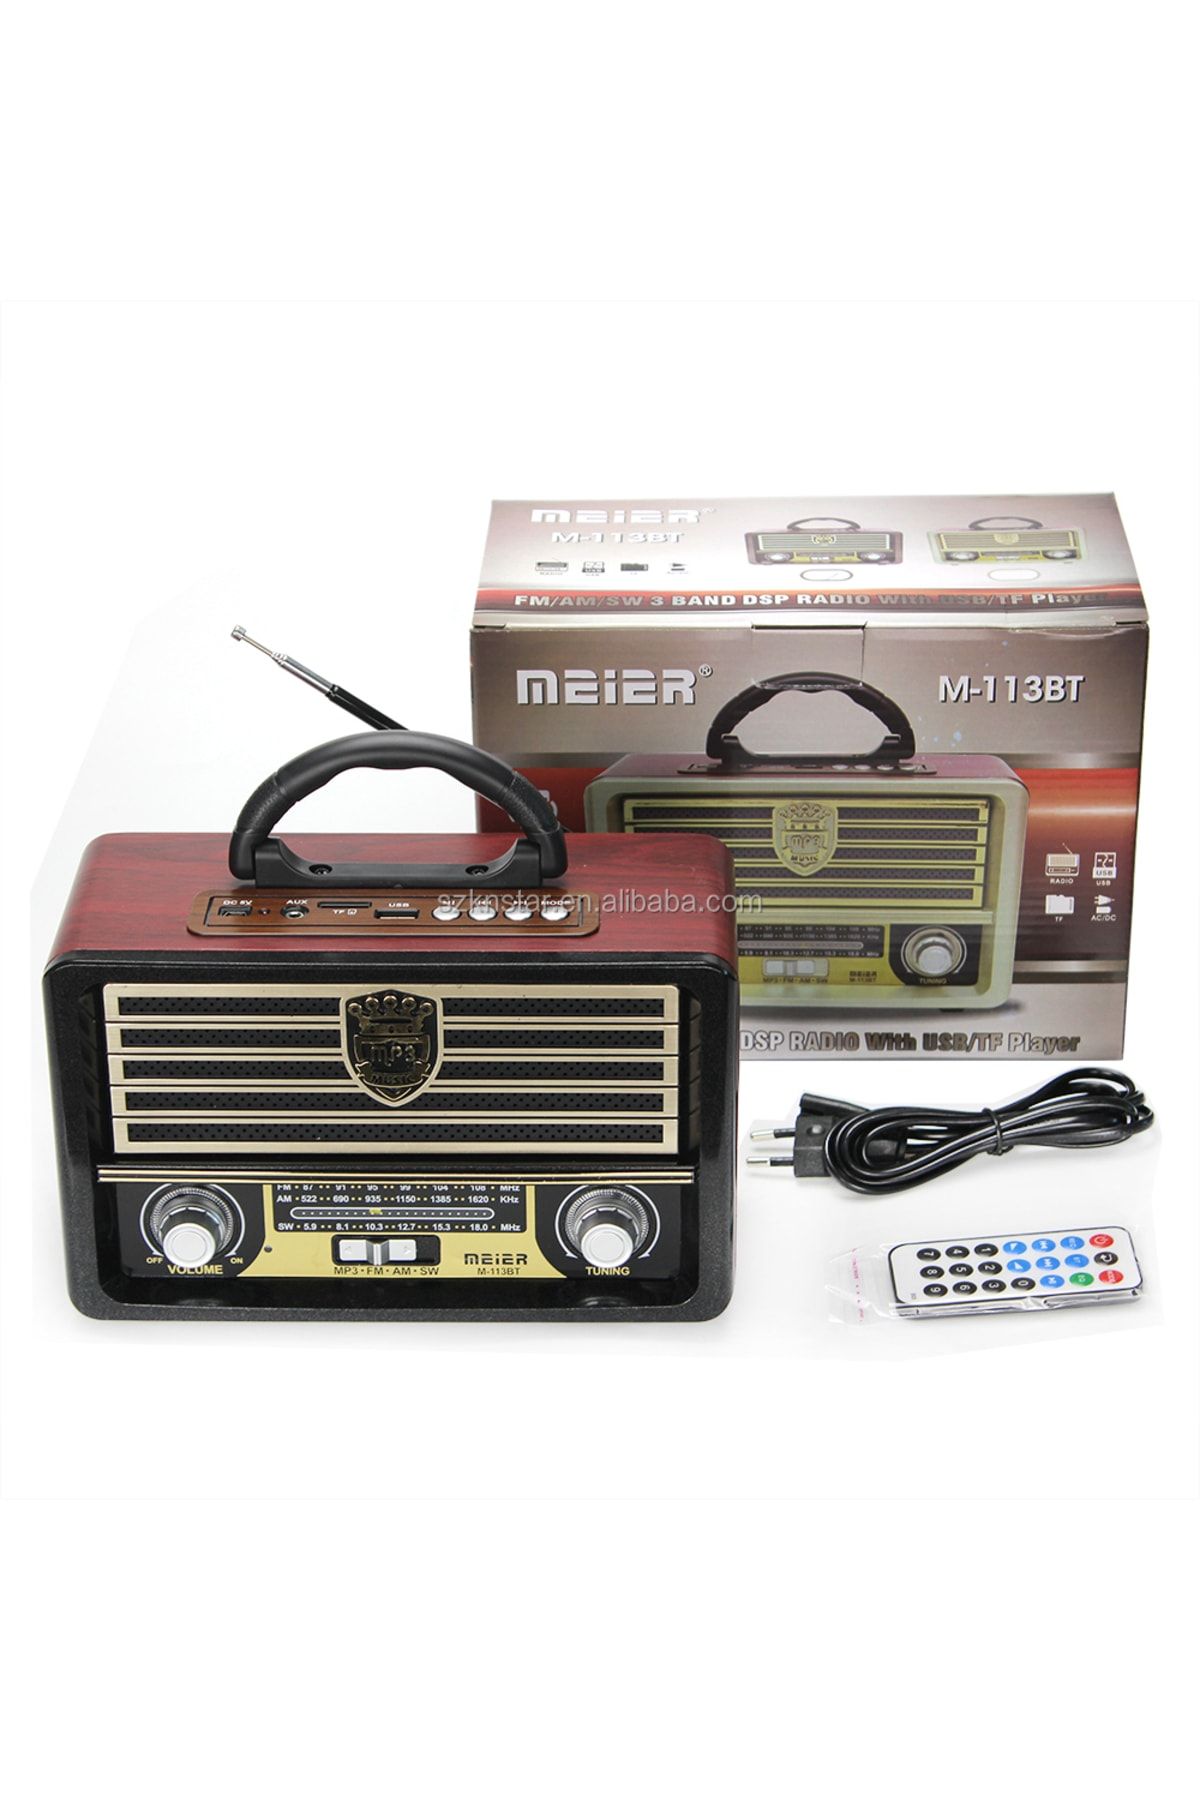 Tastech Meier M-113bt Nostaljik Radyo Usb Aux Bluetooth Uzaktan Kumanda